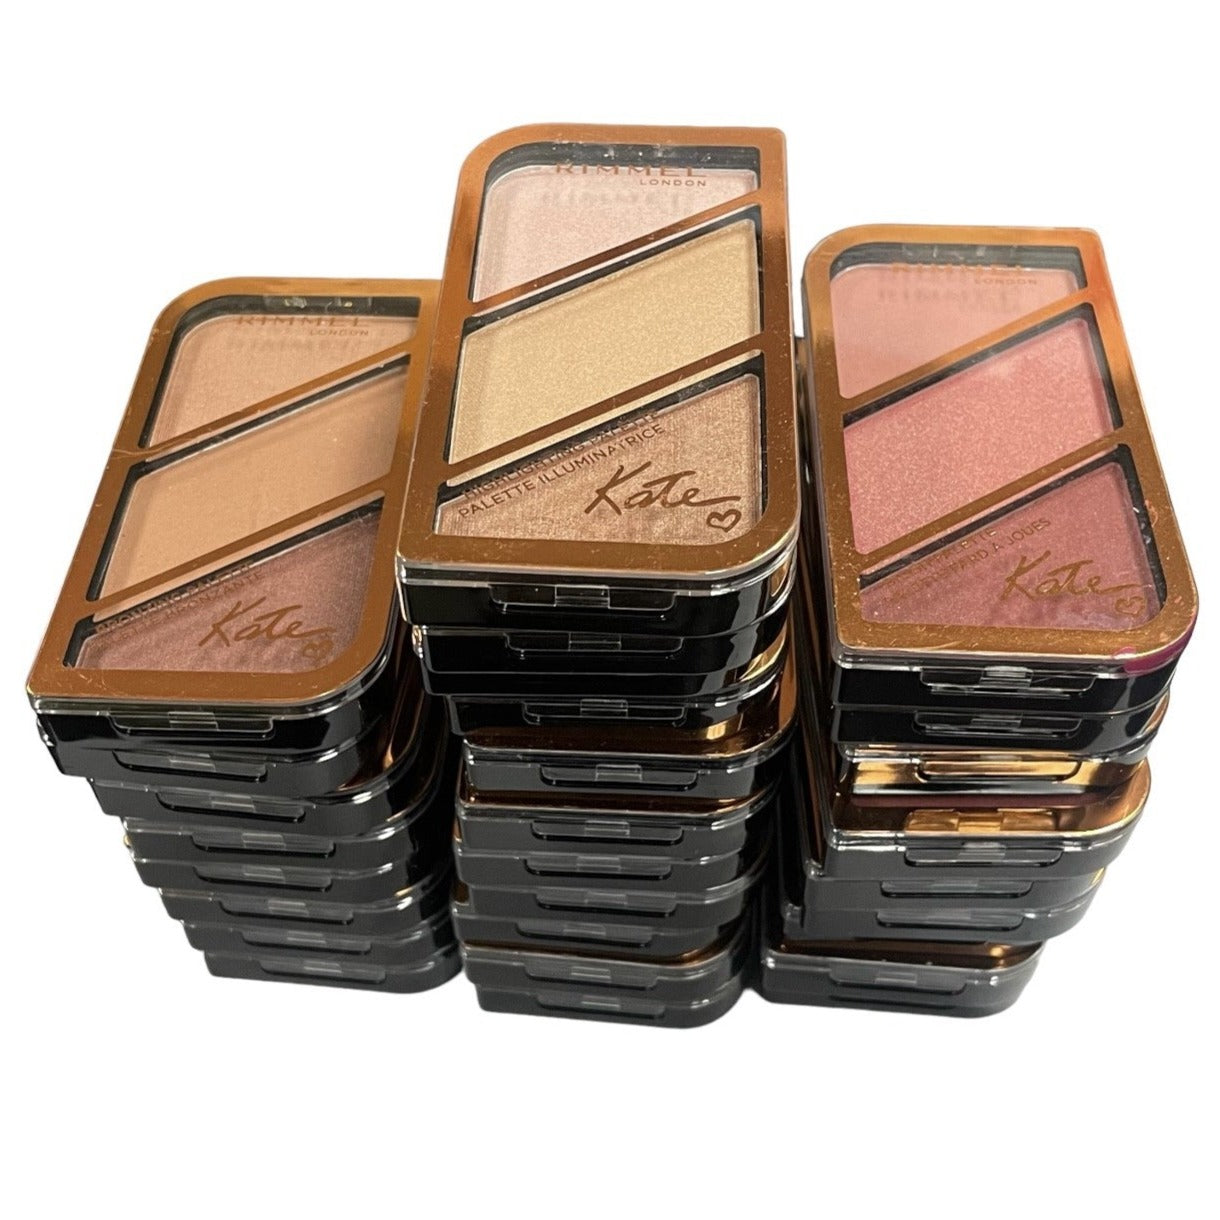 Shelf Pull Makeup - Rimmel Kate Palette, Assortment Of Blush, Highlighting & Bronzing - 28 Units cosmetics liquidation wholesale surplus overstock invenory